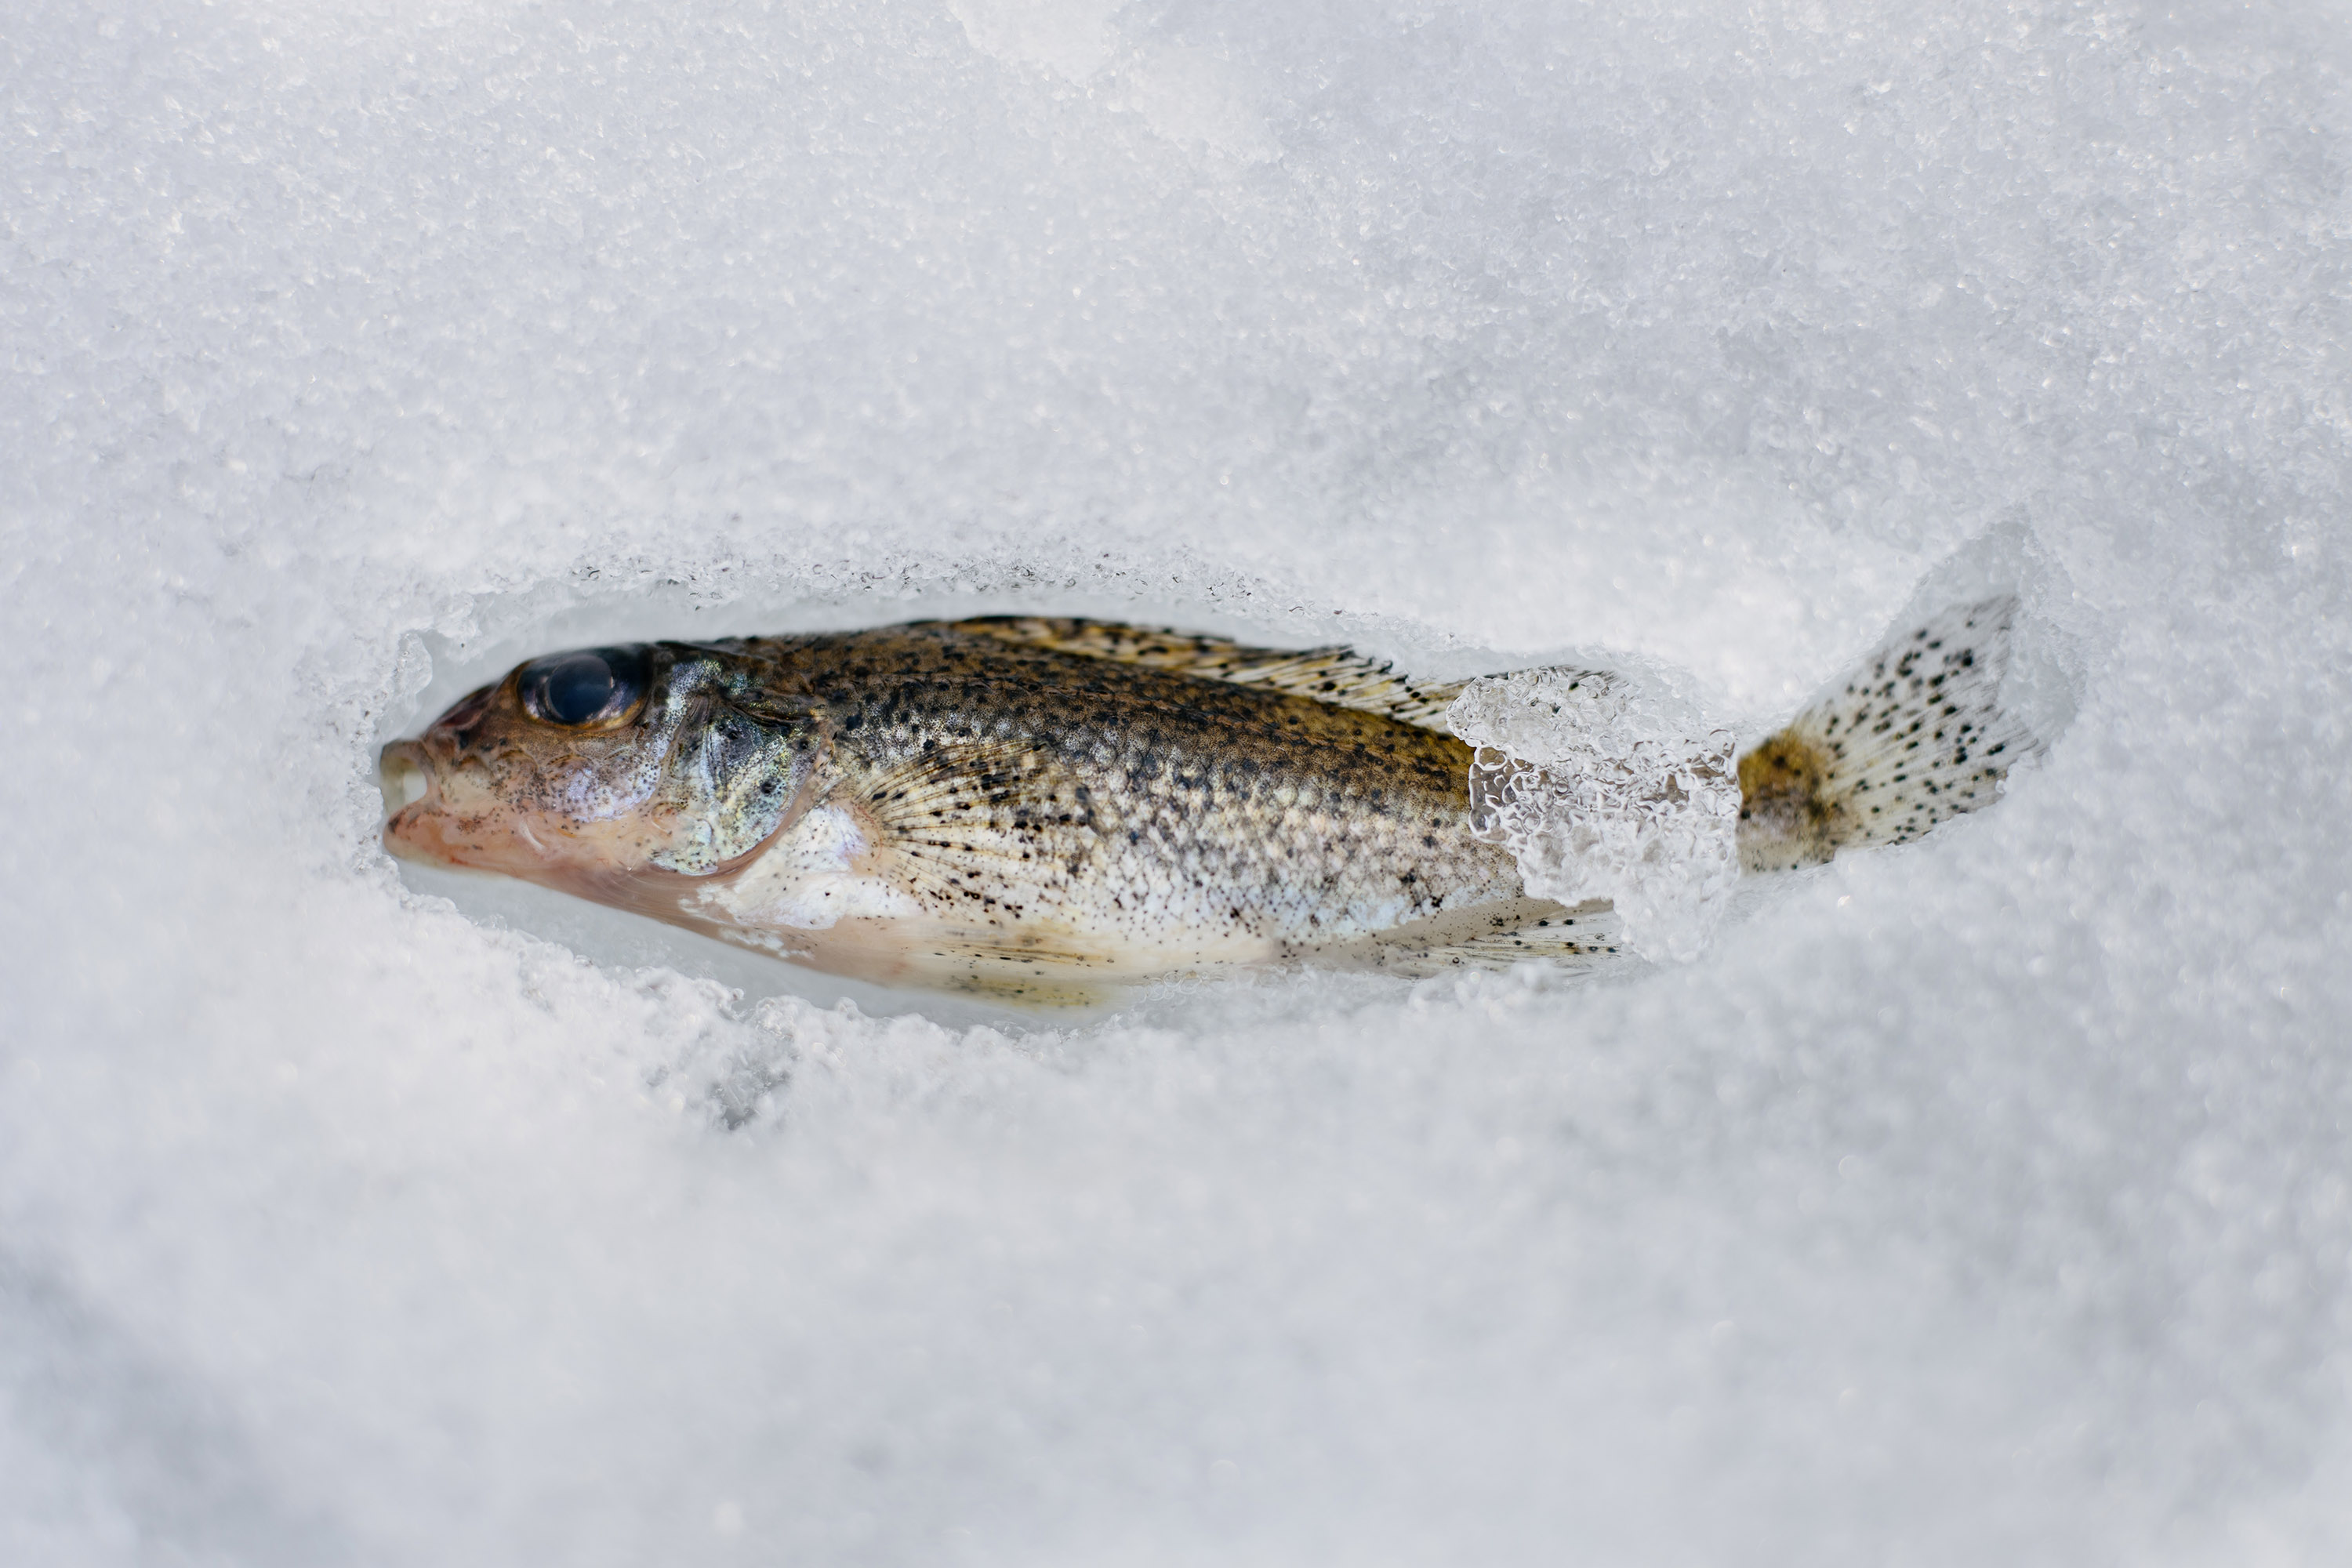 Frozen fish - Shot at a minimum focal distance